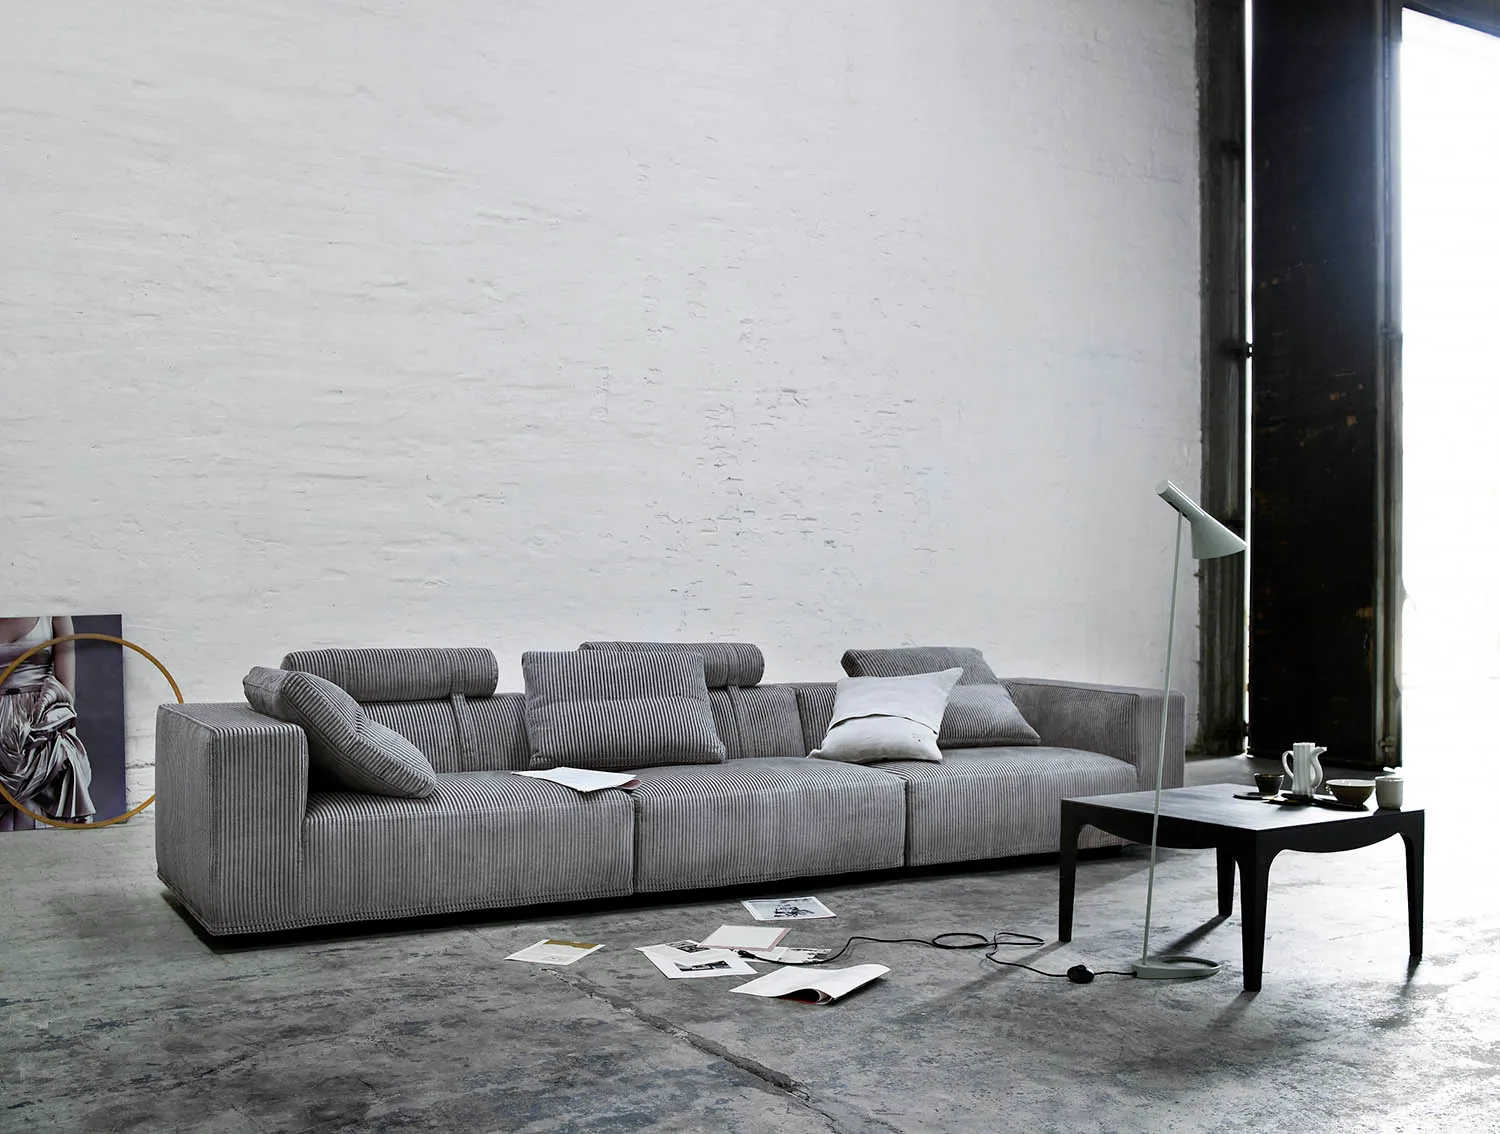 Eilersen sofa | Køb Baseline fra Eilersen